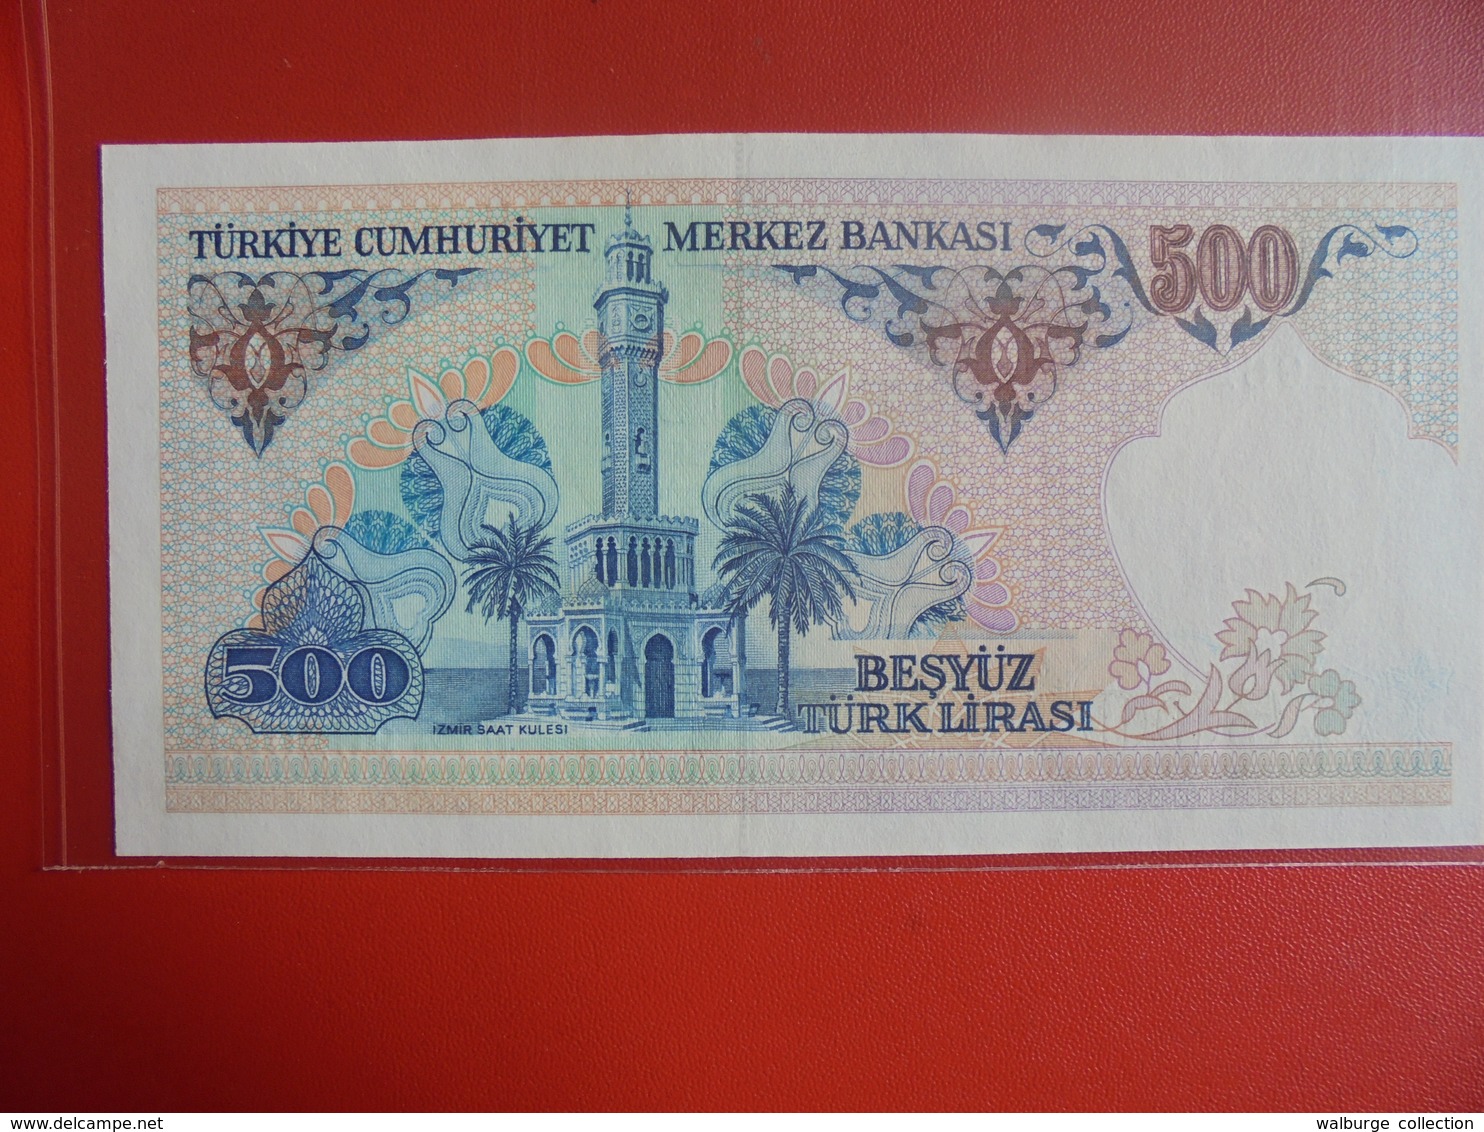 TURQUIE 500 LIRASI 1970(83) PEU CIRCULER/NEUF - Turquie